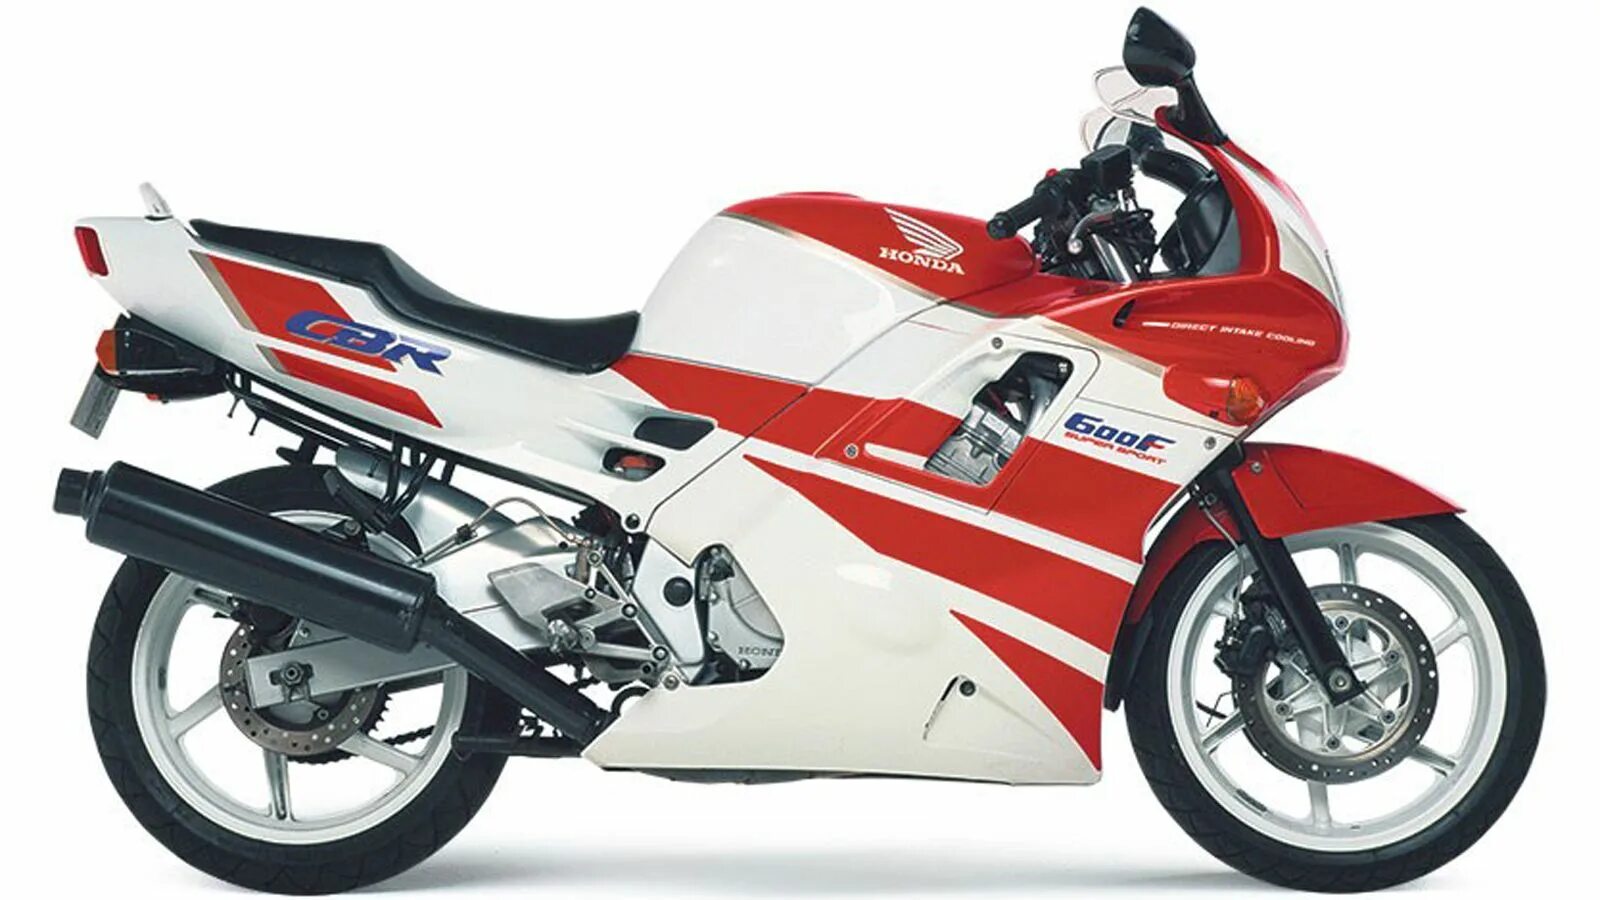 Honda CBR 600 f2. Honda CBR 600 f1. Хонда ЦБР 600 Ф. Honda CBR 600 F 1989. Купить мотоцикл сбр